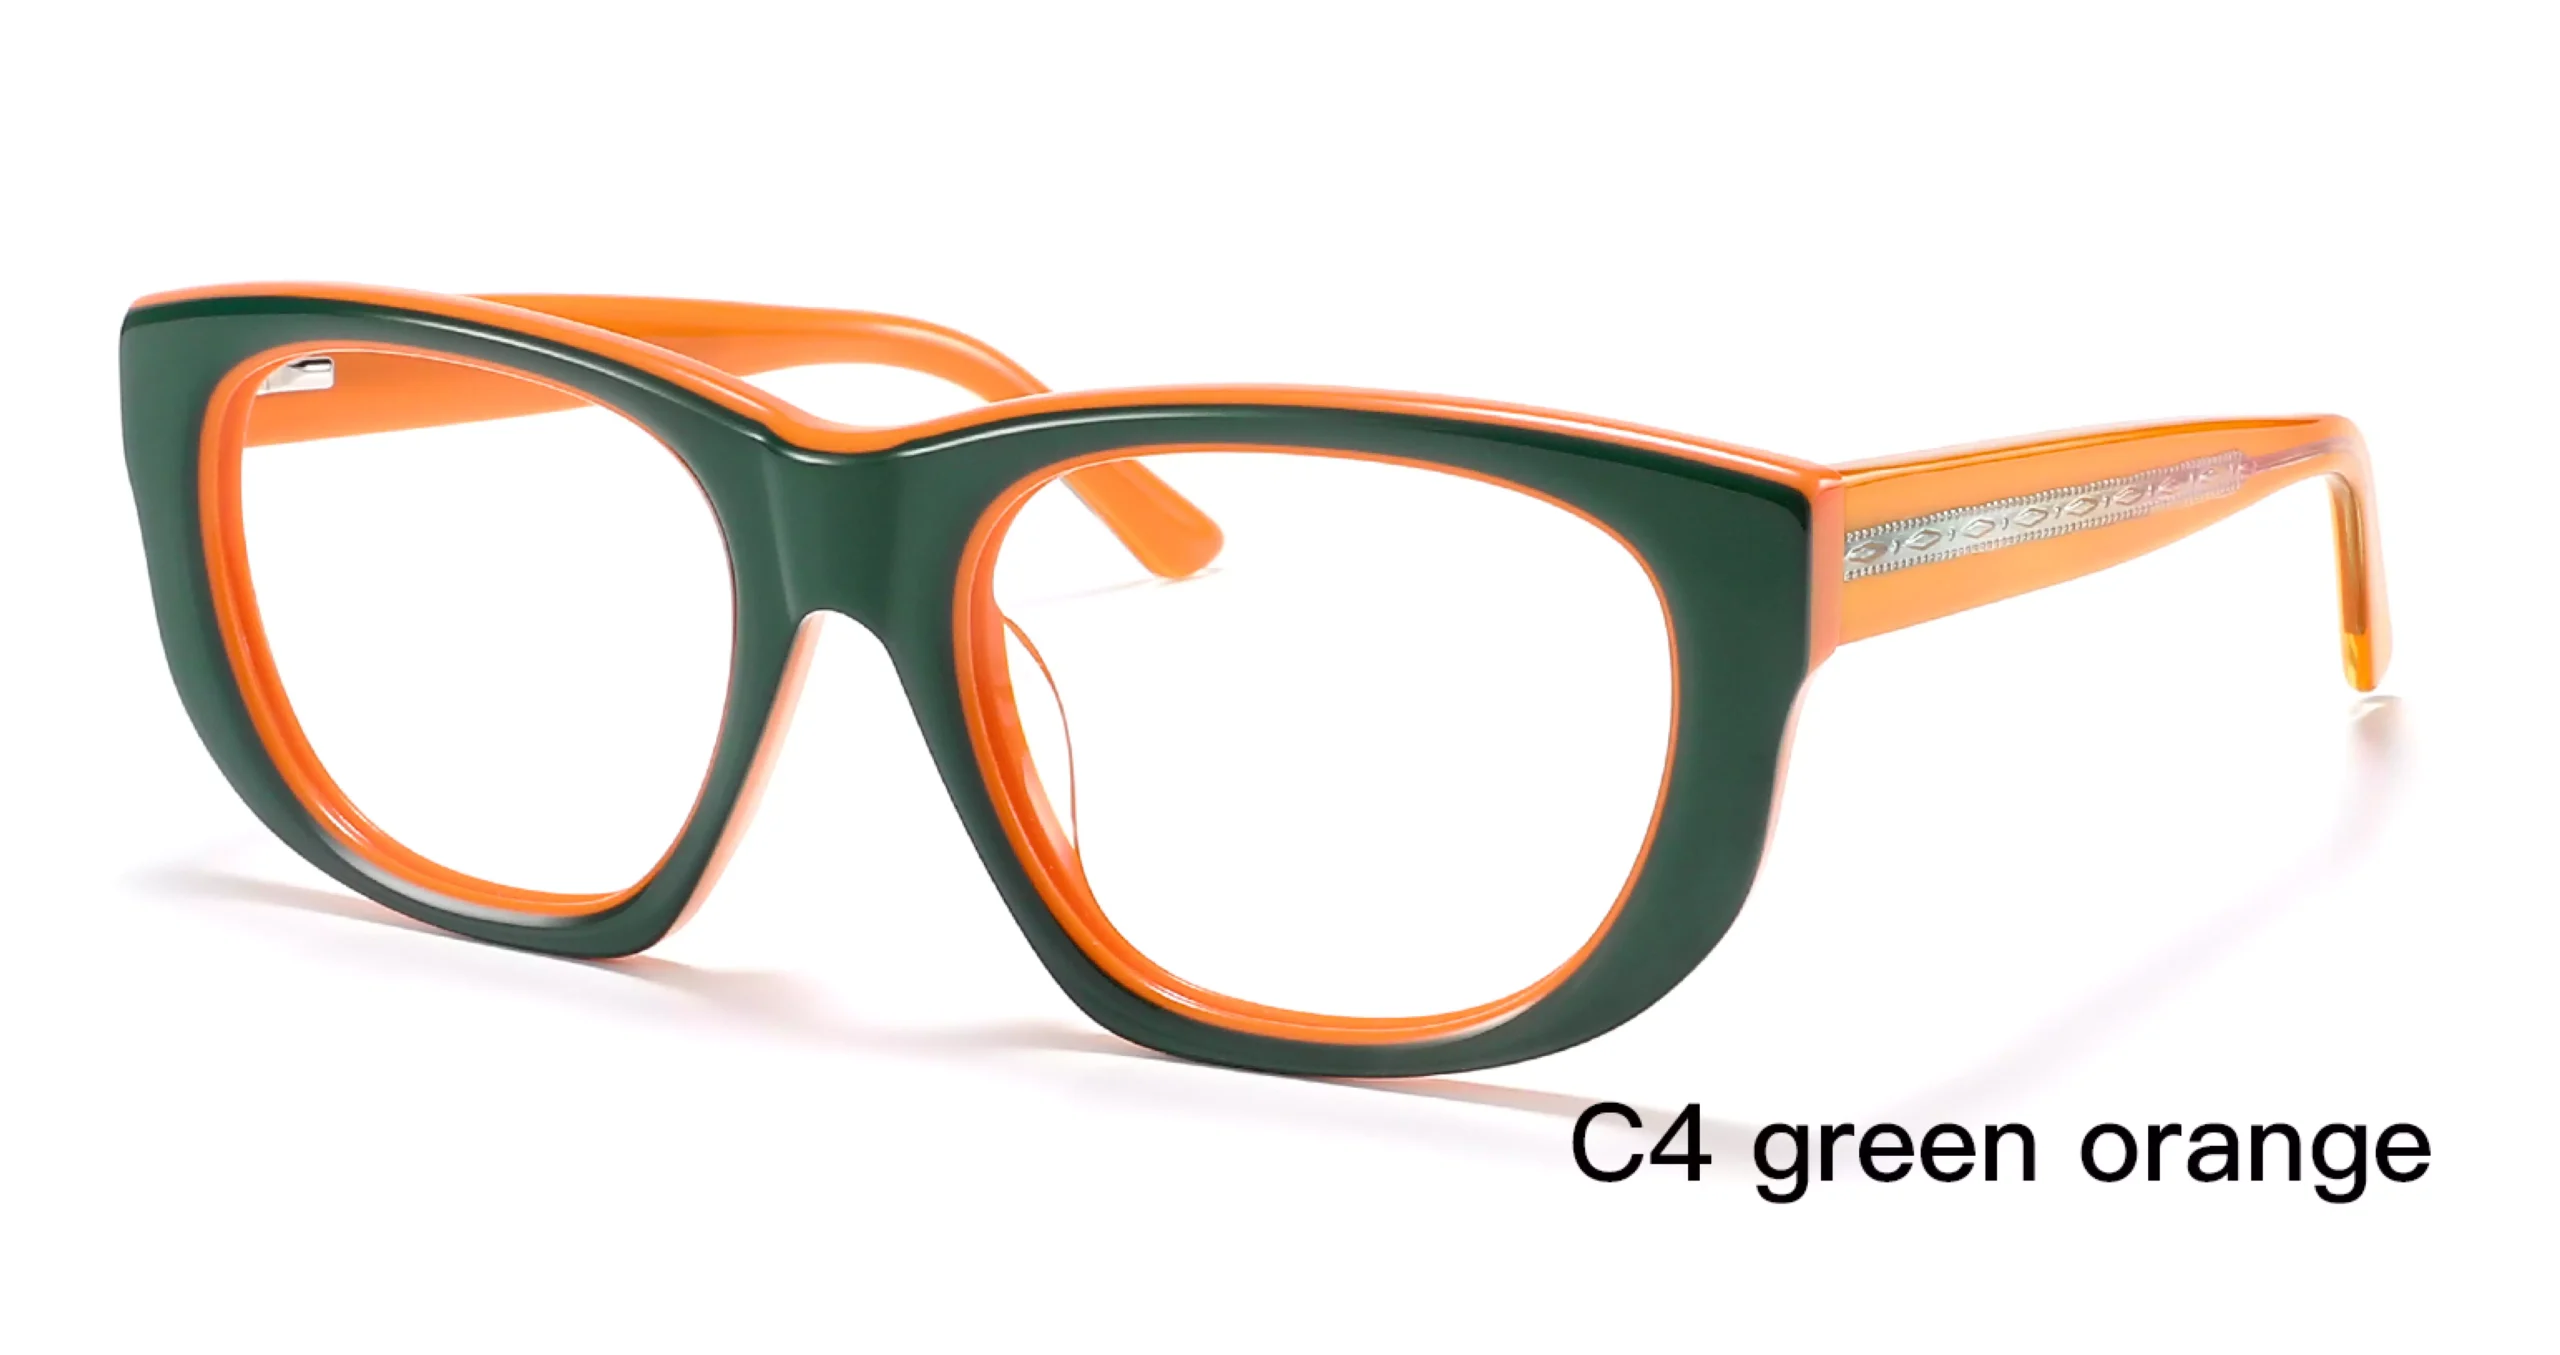 Wholesale, green, orange, gradient temple, Oval, Eyeglass Frames,45 degree display, laser engraved wire core, diamond patterns